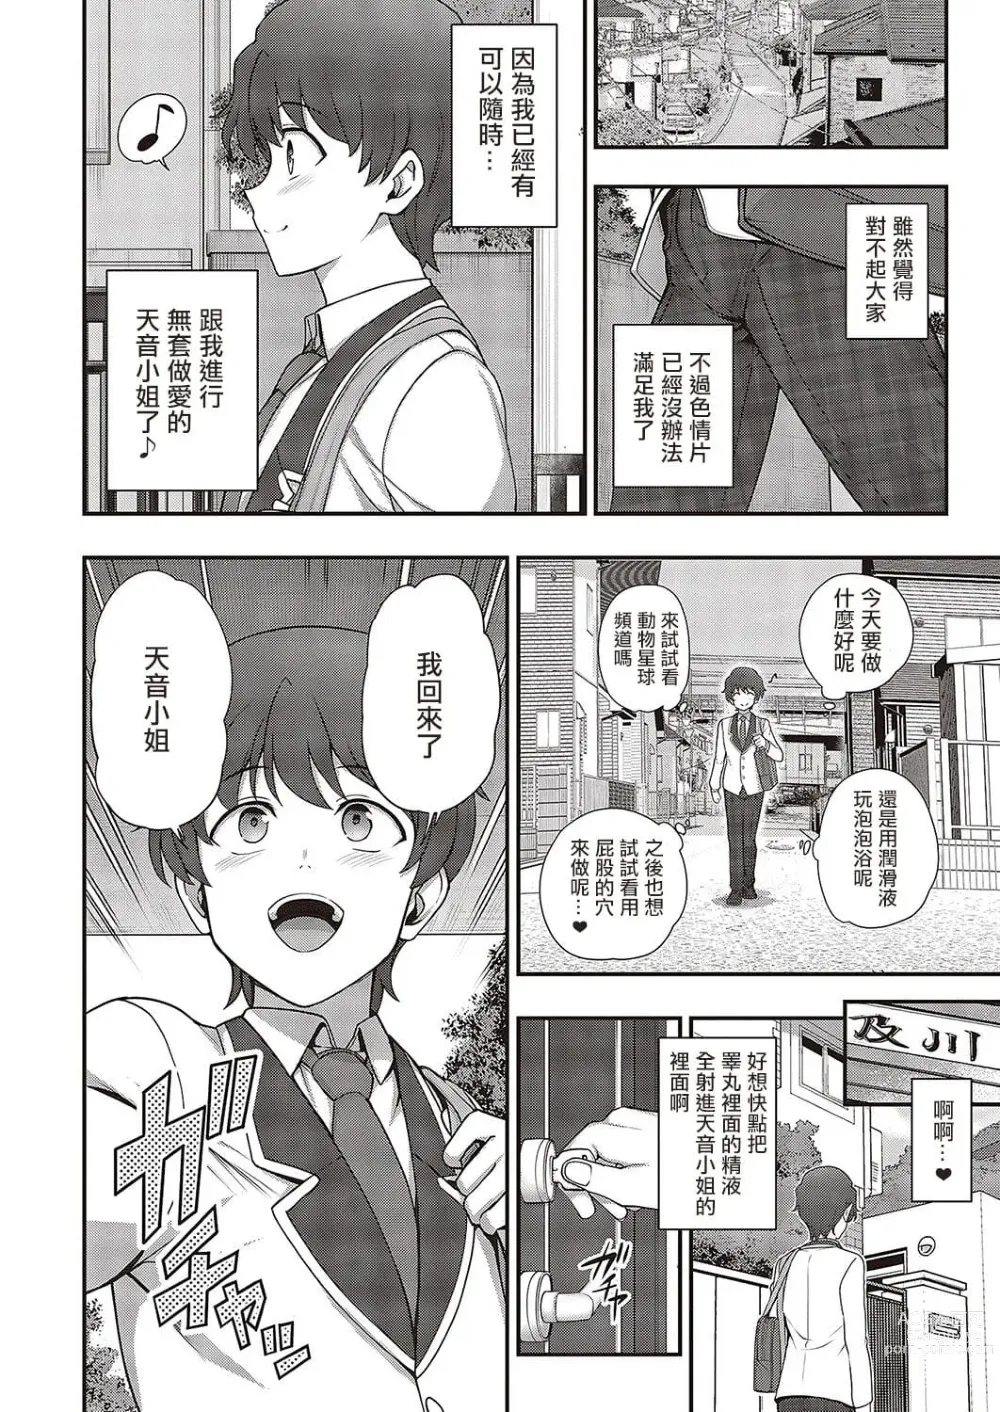 Page 819 of doujinshi aiue oka collection